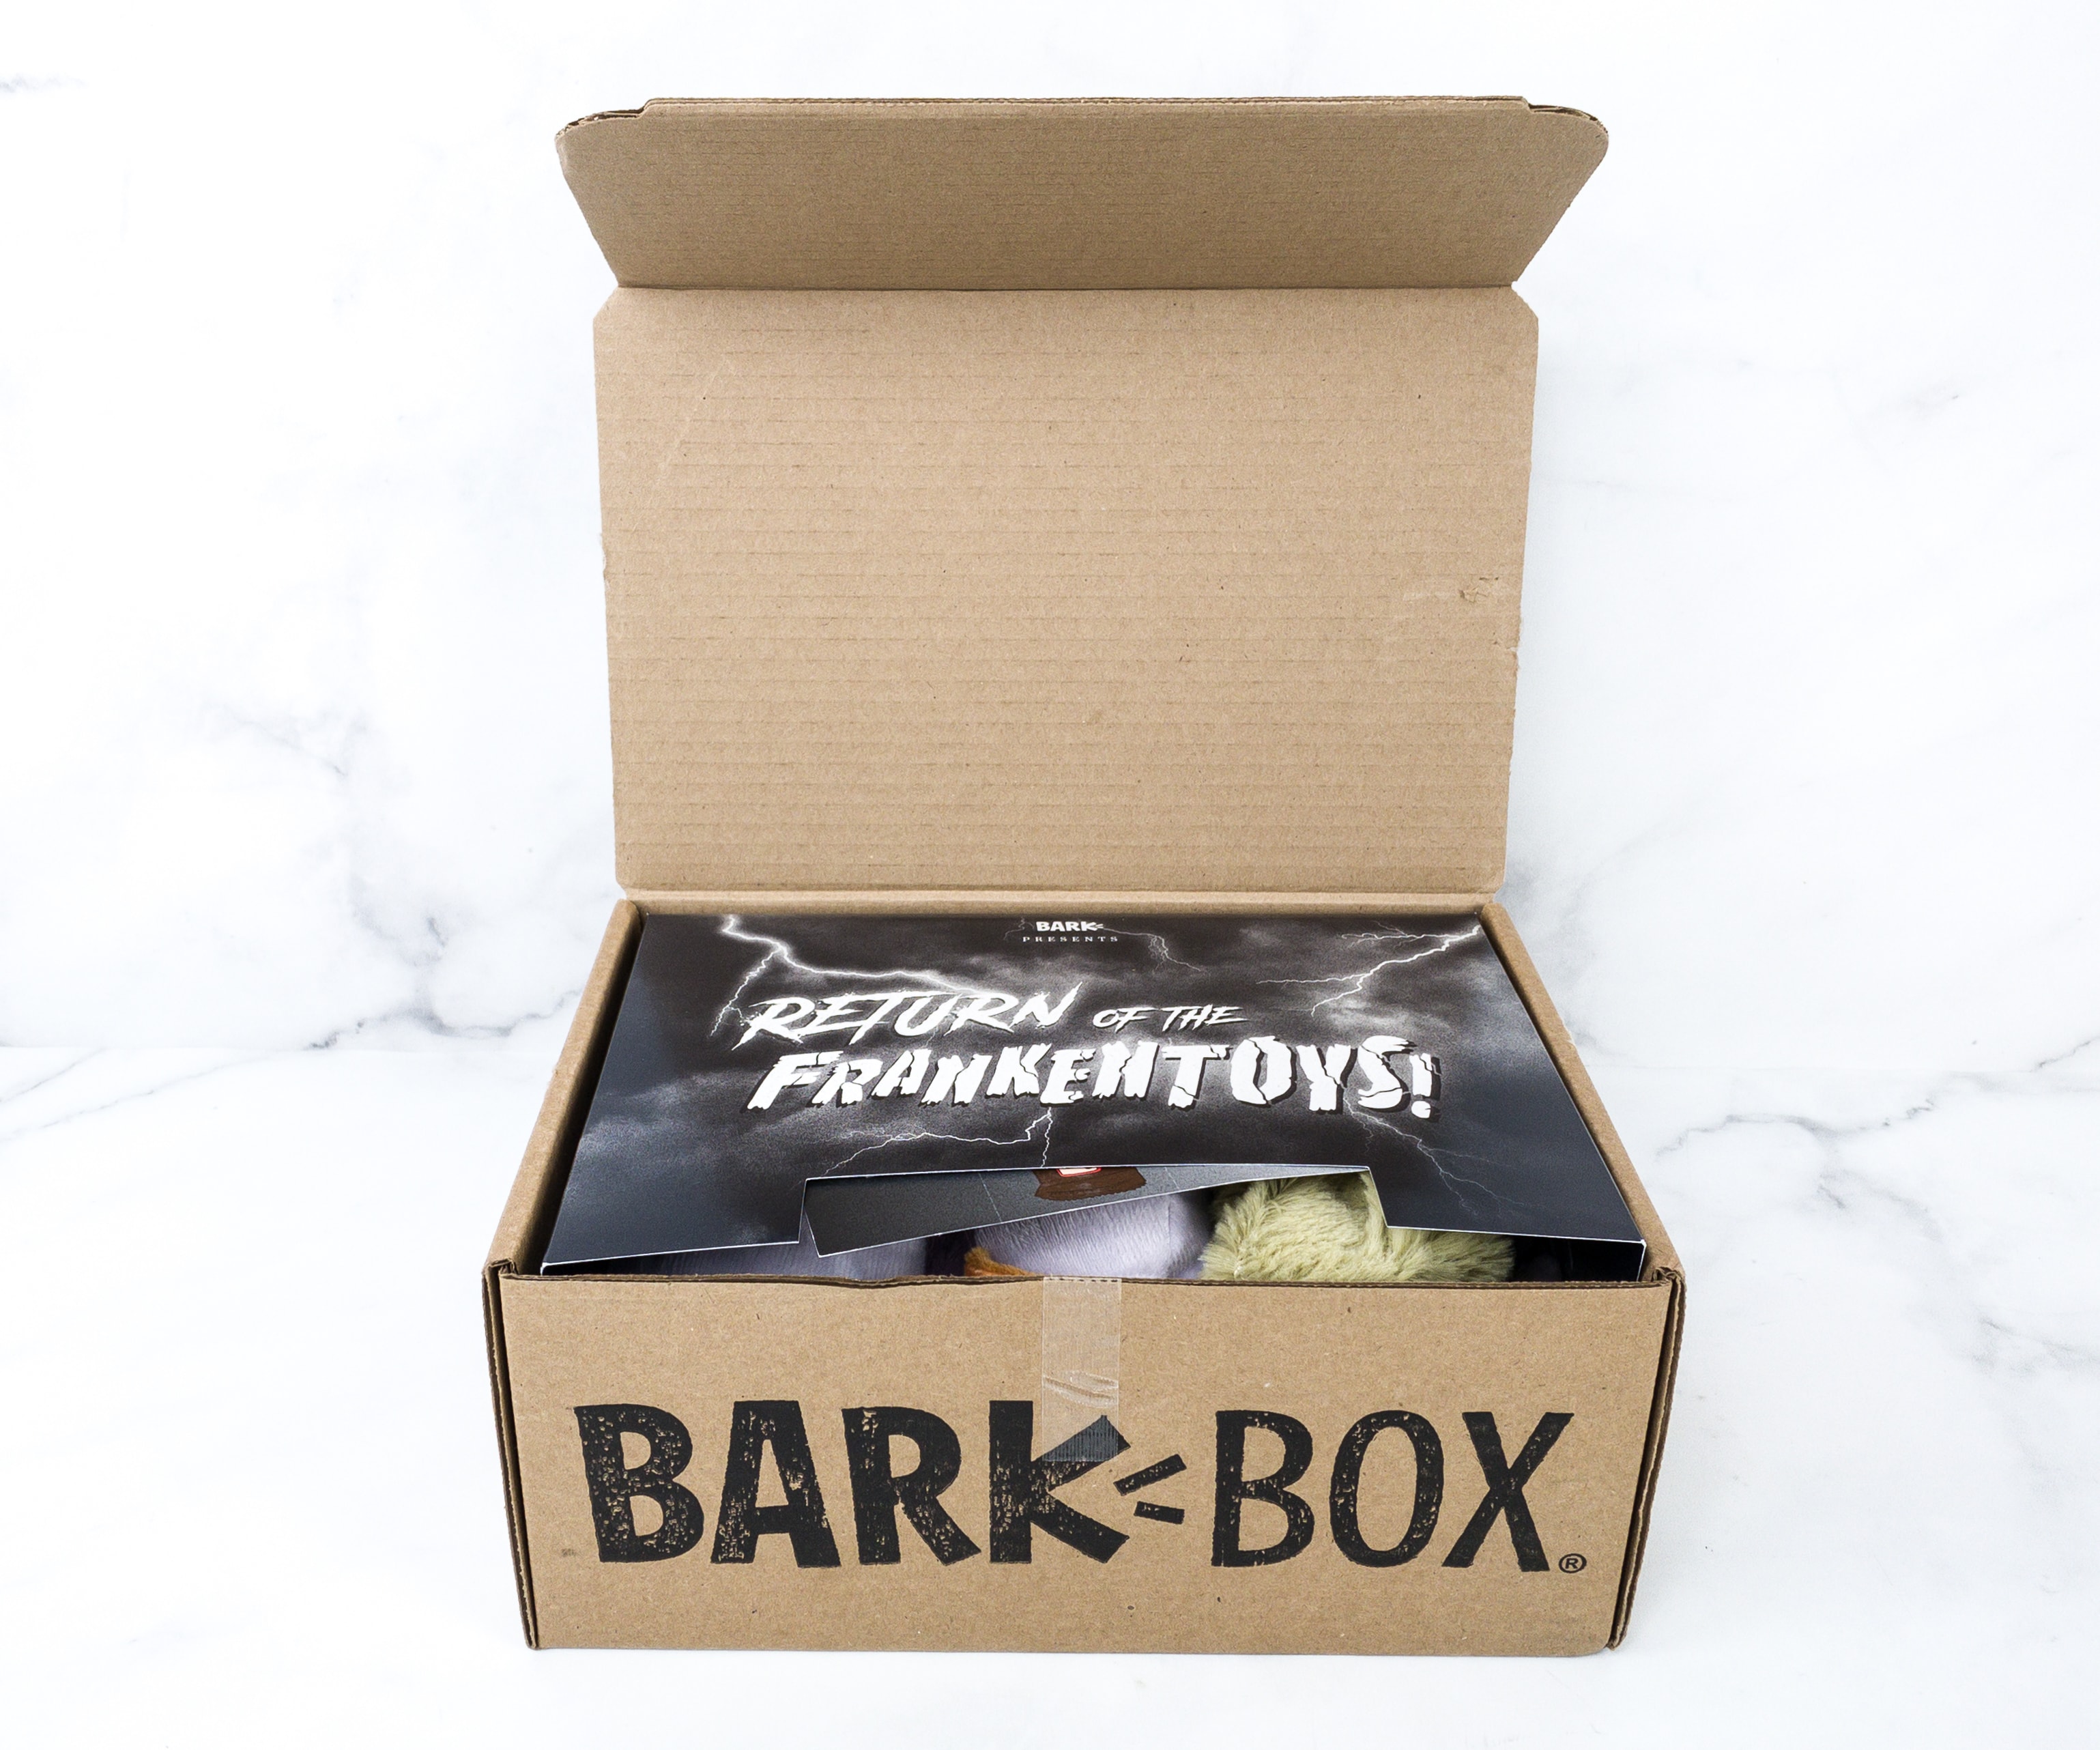 barkbox alternative